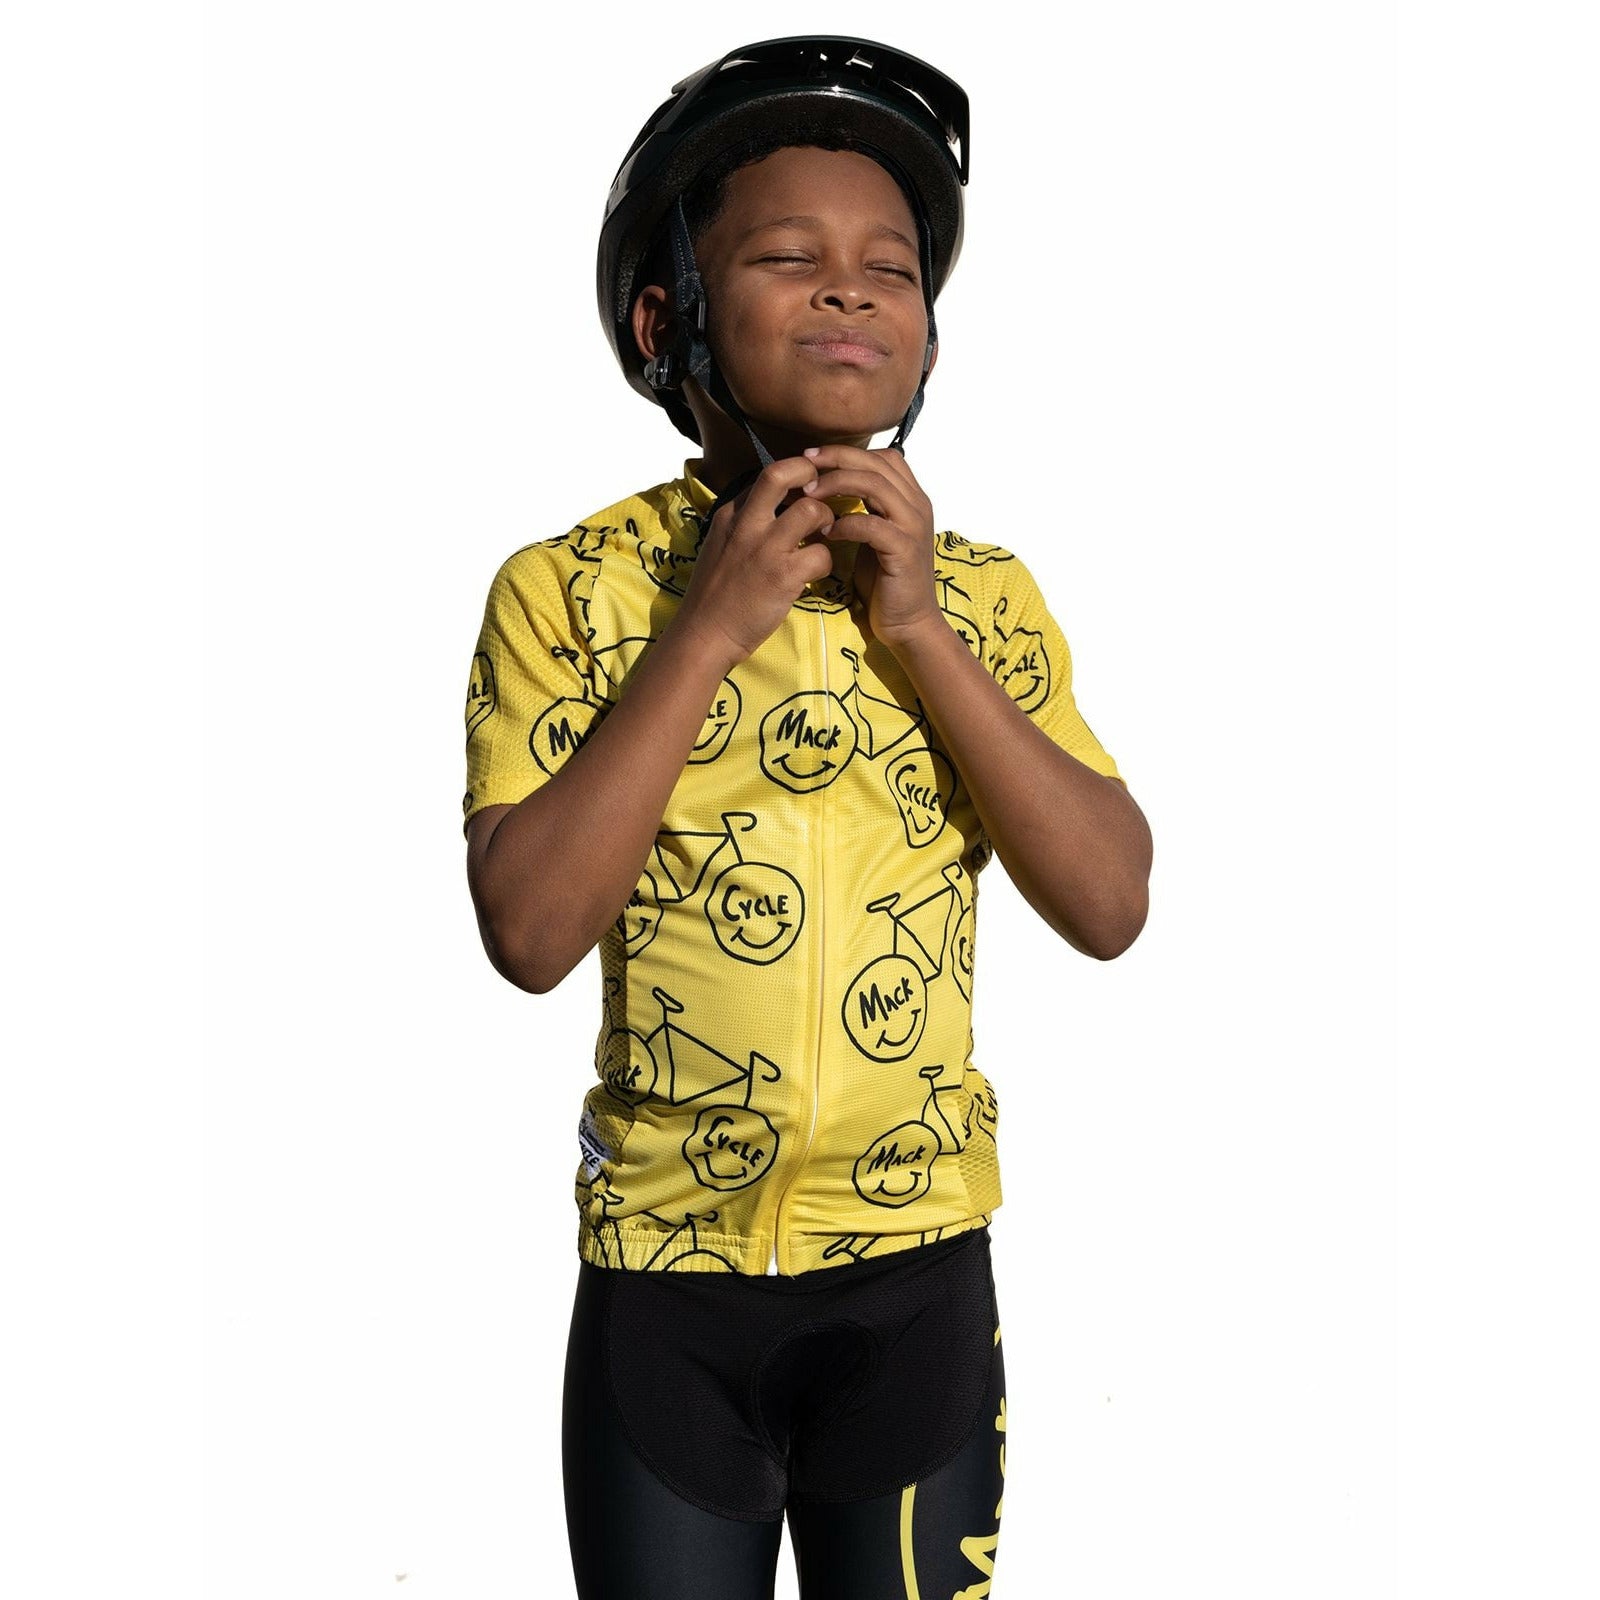 Mack Cycle Happy Riding - Kid's Padded Cycling Short